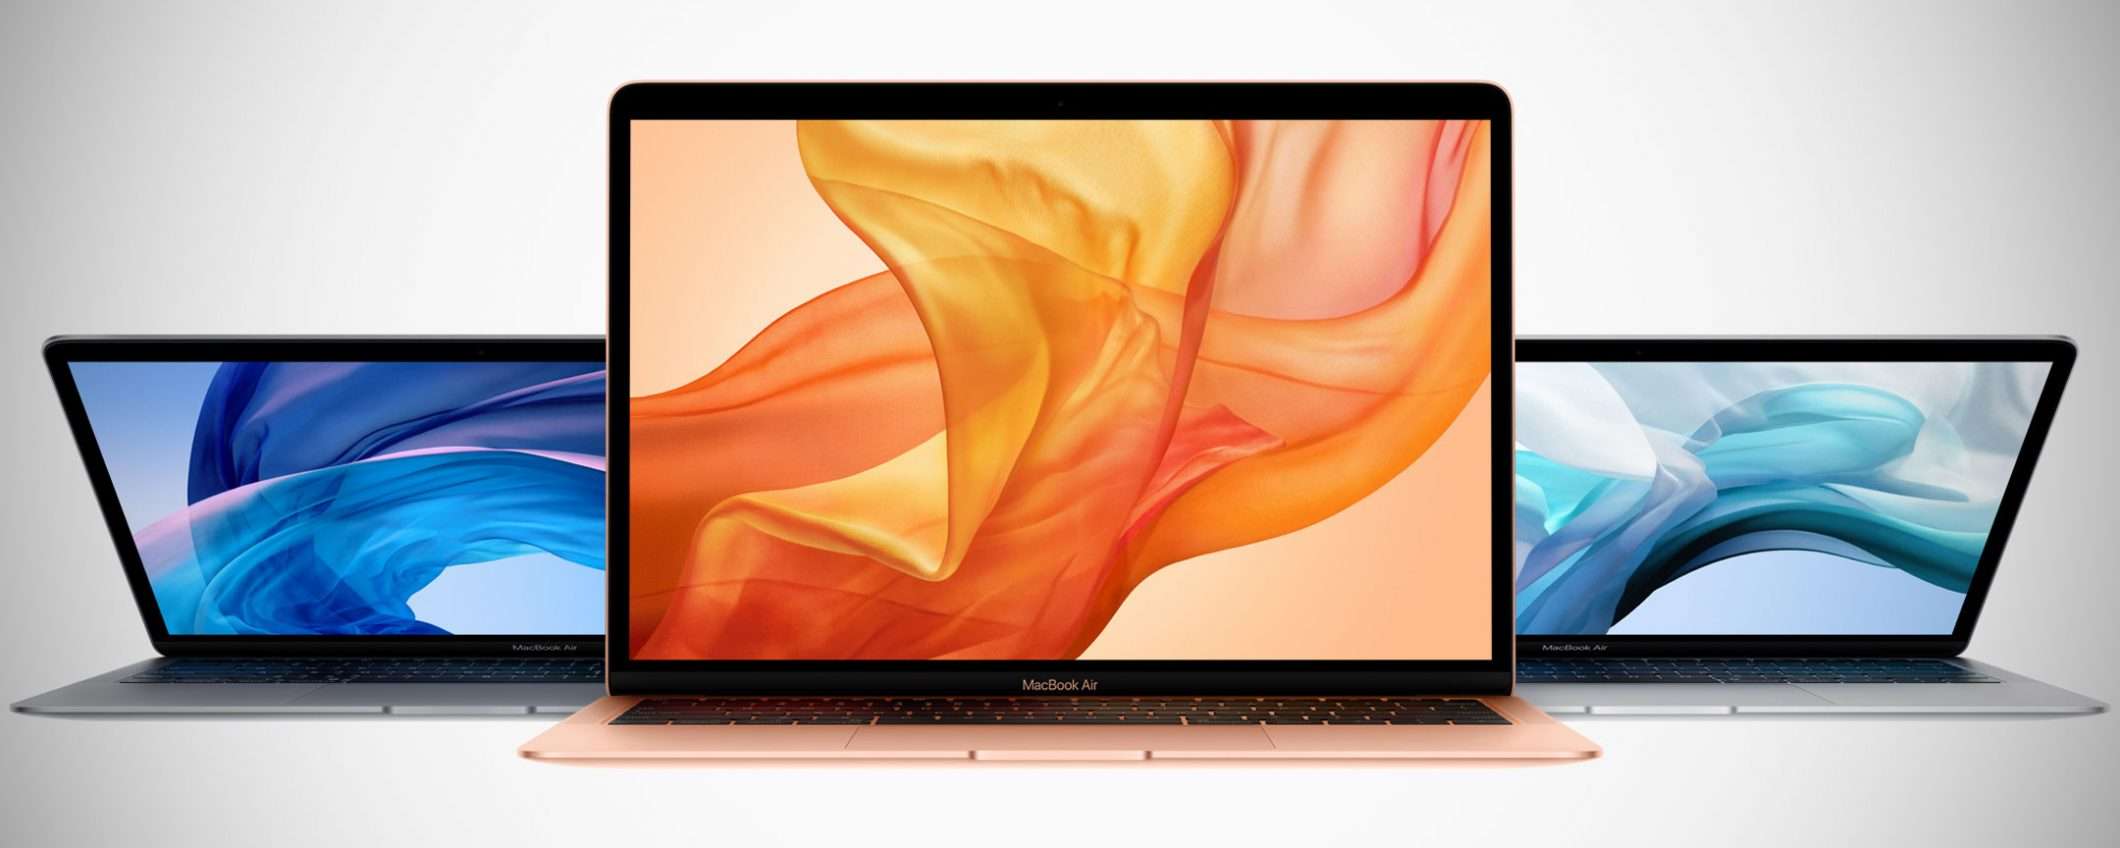 Problemi anche per i MacBook Air del 2018